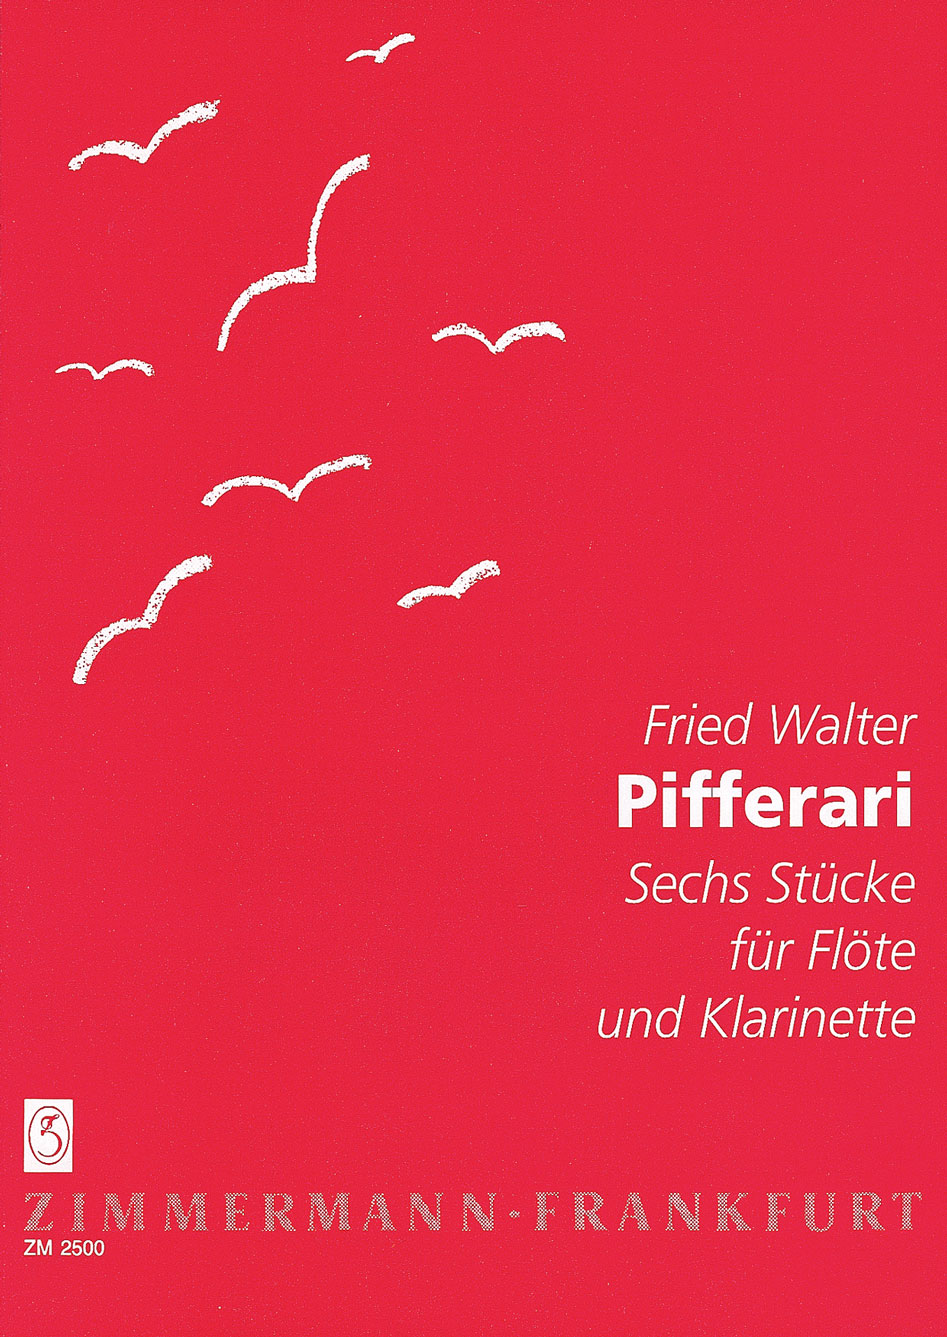 fried-walter-piffera_0001.JPG